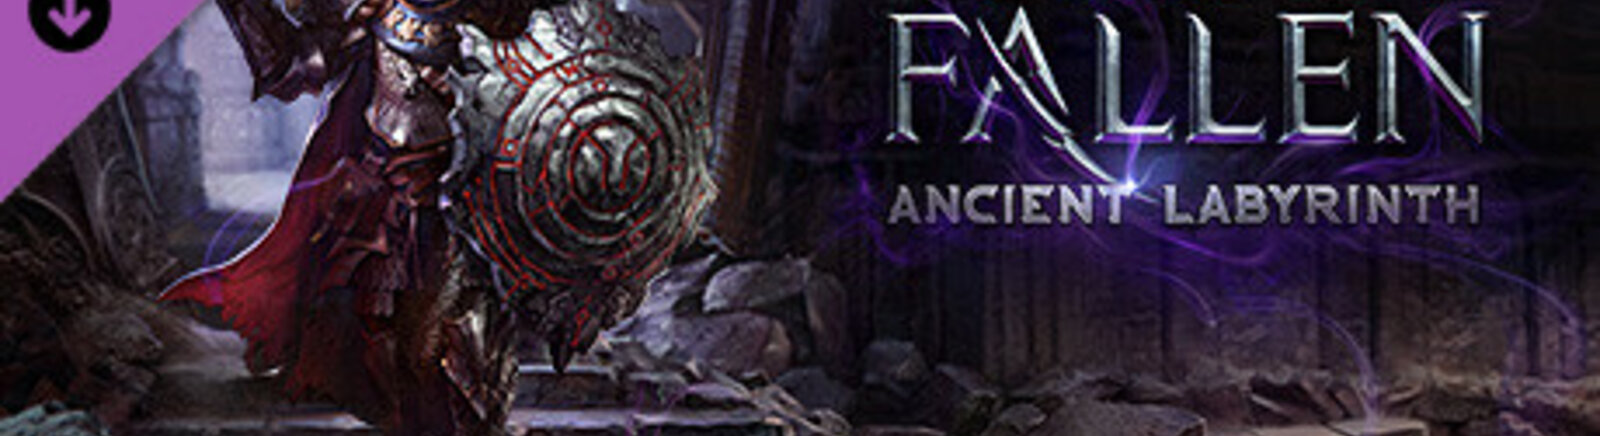 Дата выхода Lords of the Fallen: Ancient Labyrinth  на PC, PS4 и Xbox One в России и во всем мире